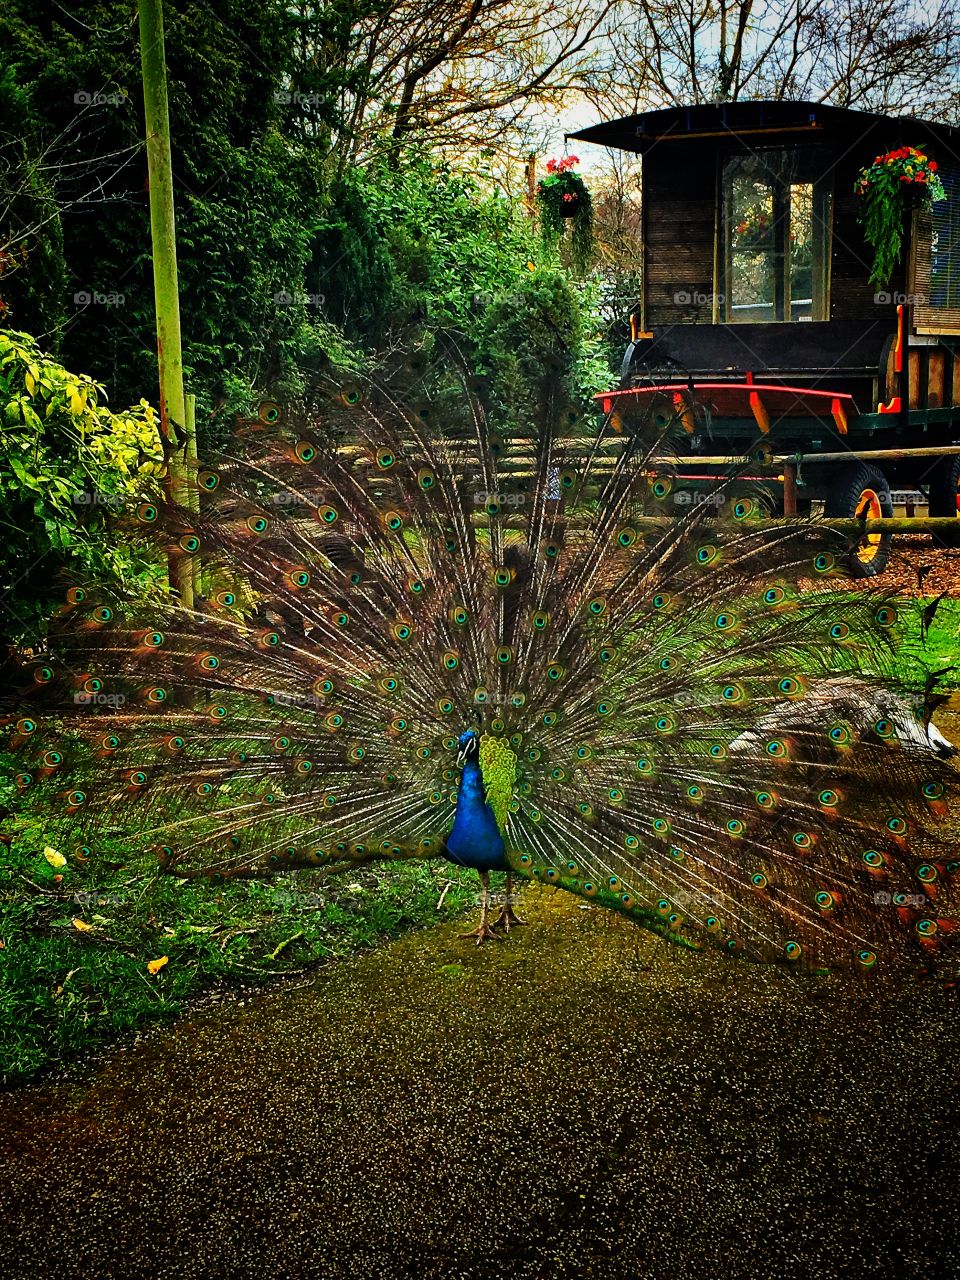 Peacock with feathers spread, Greenacres wildlife park, UK